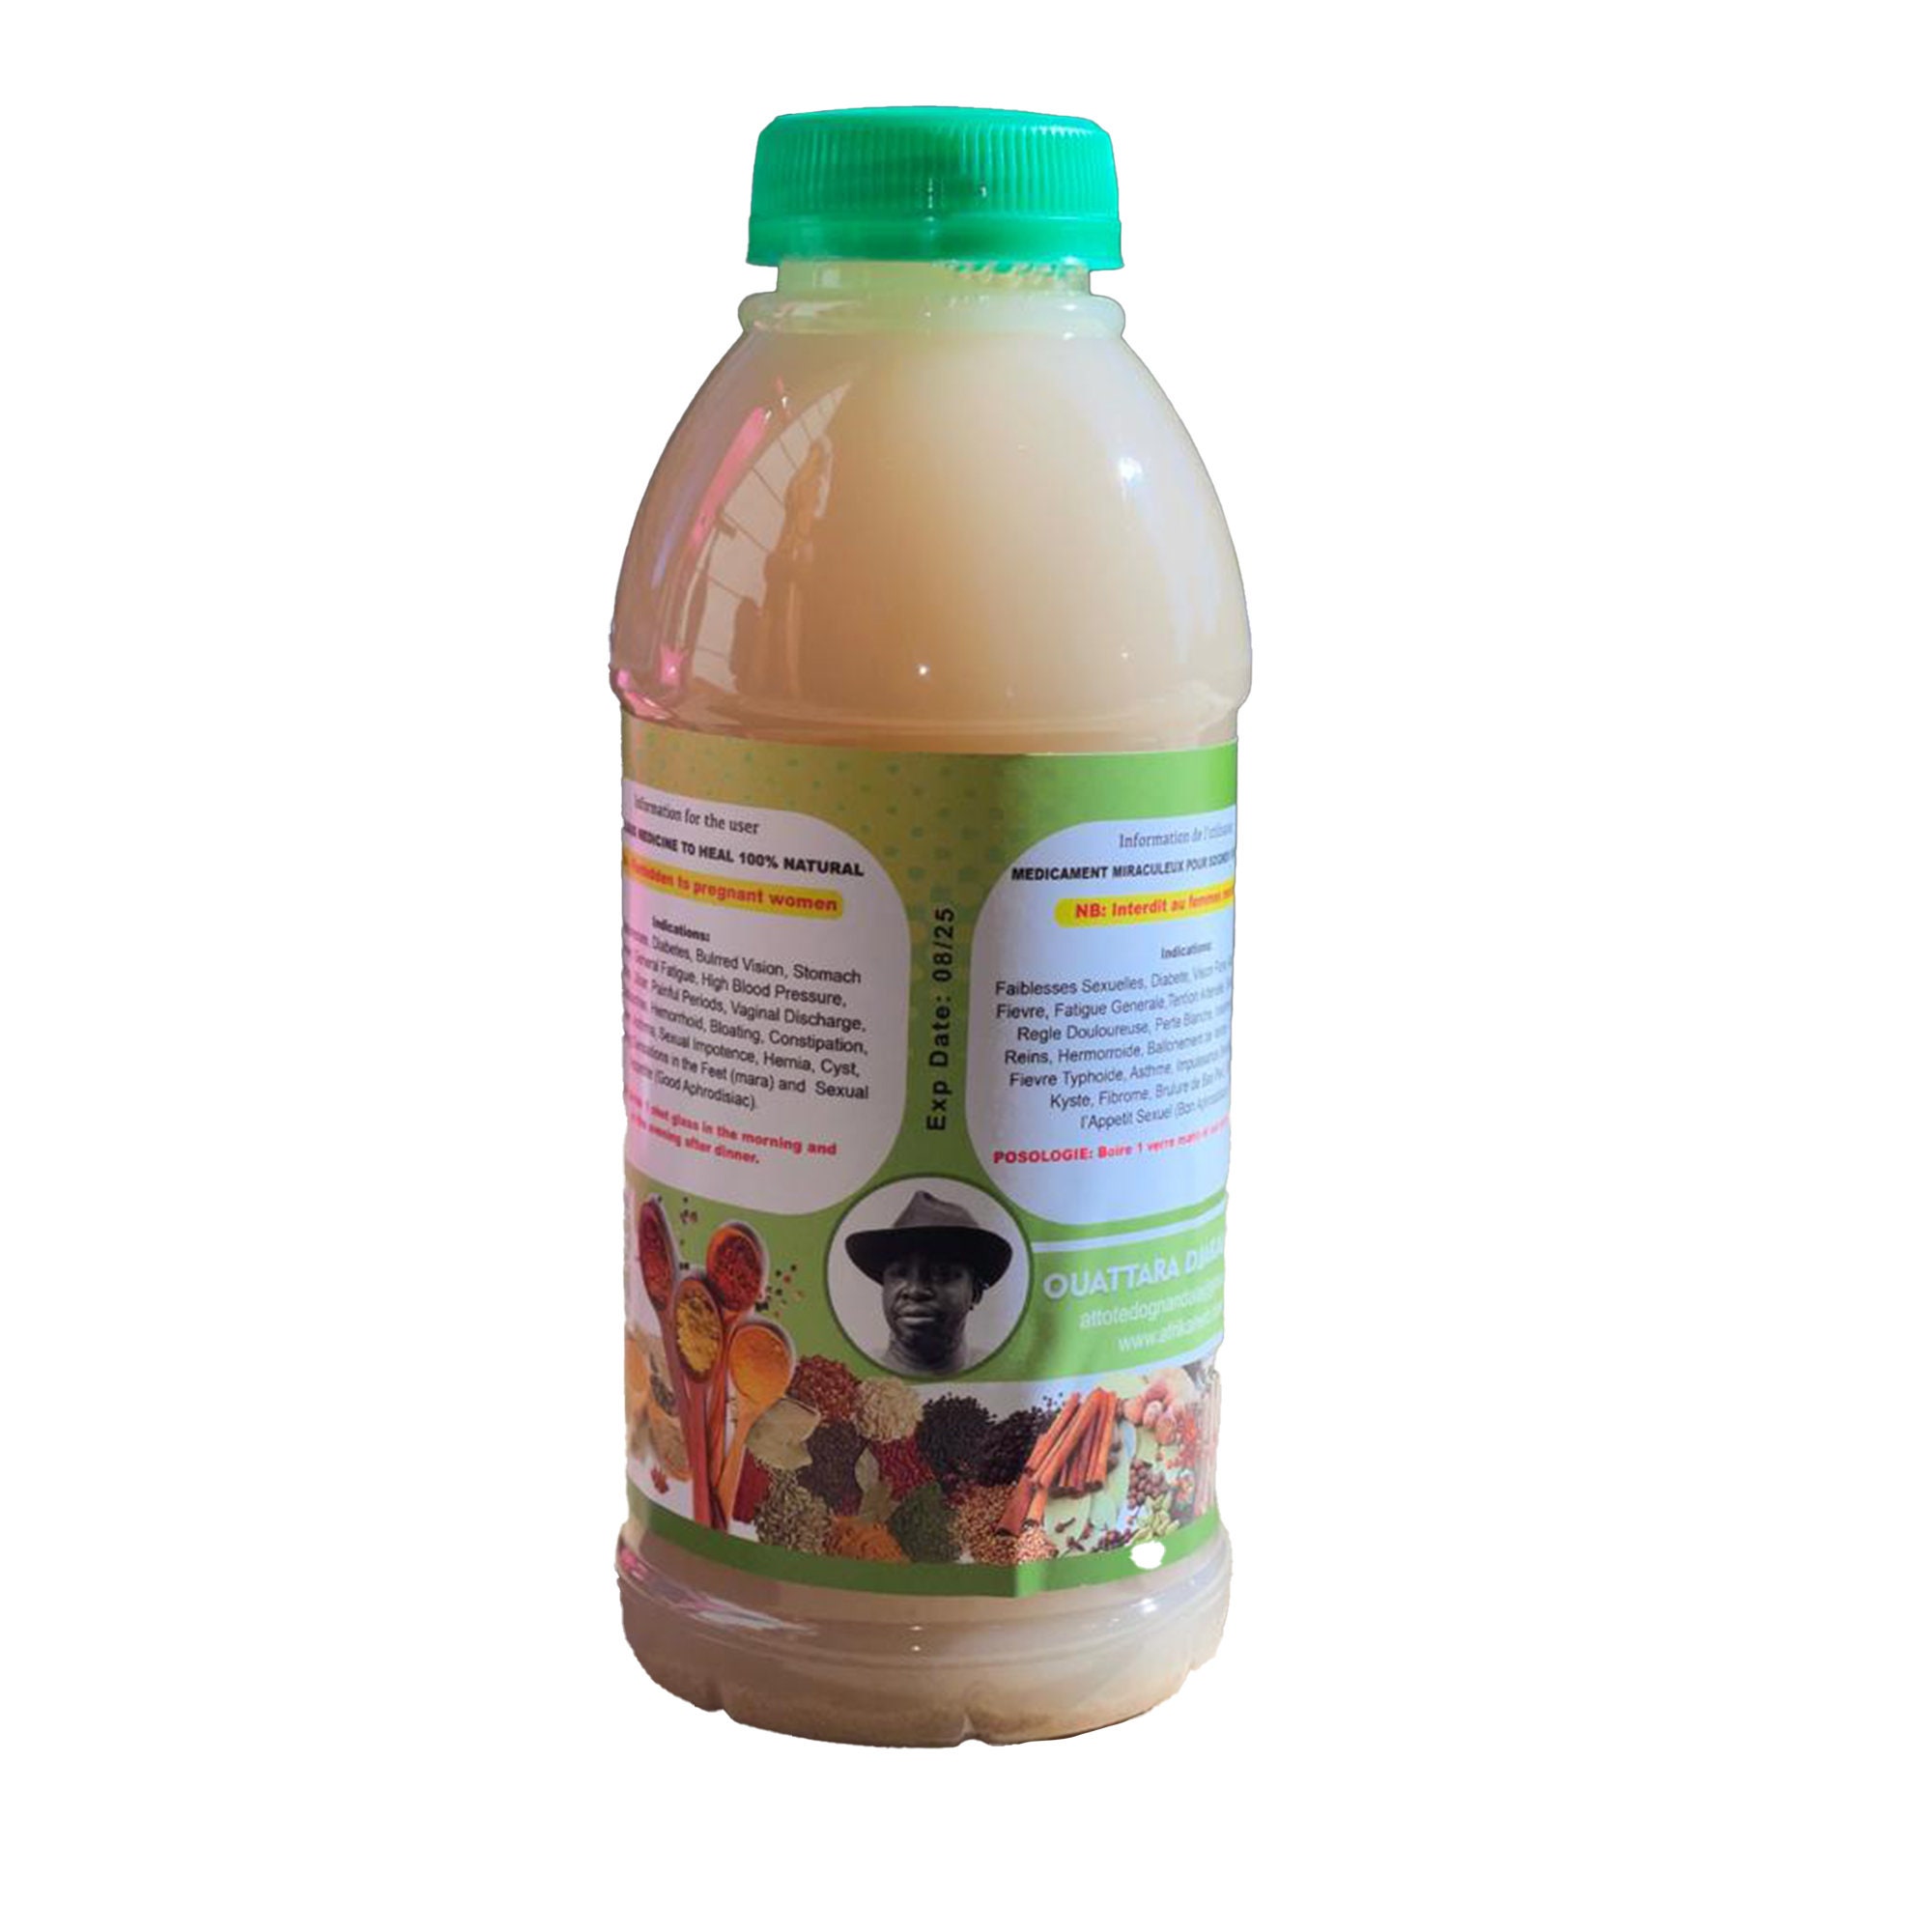 ATTOTE ORIGINAL 100% Organic Natural Herbal Drink / Ivory Coast / 16oz 